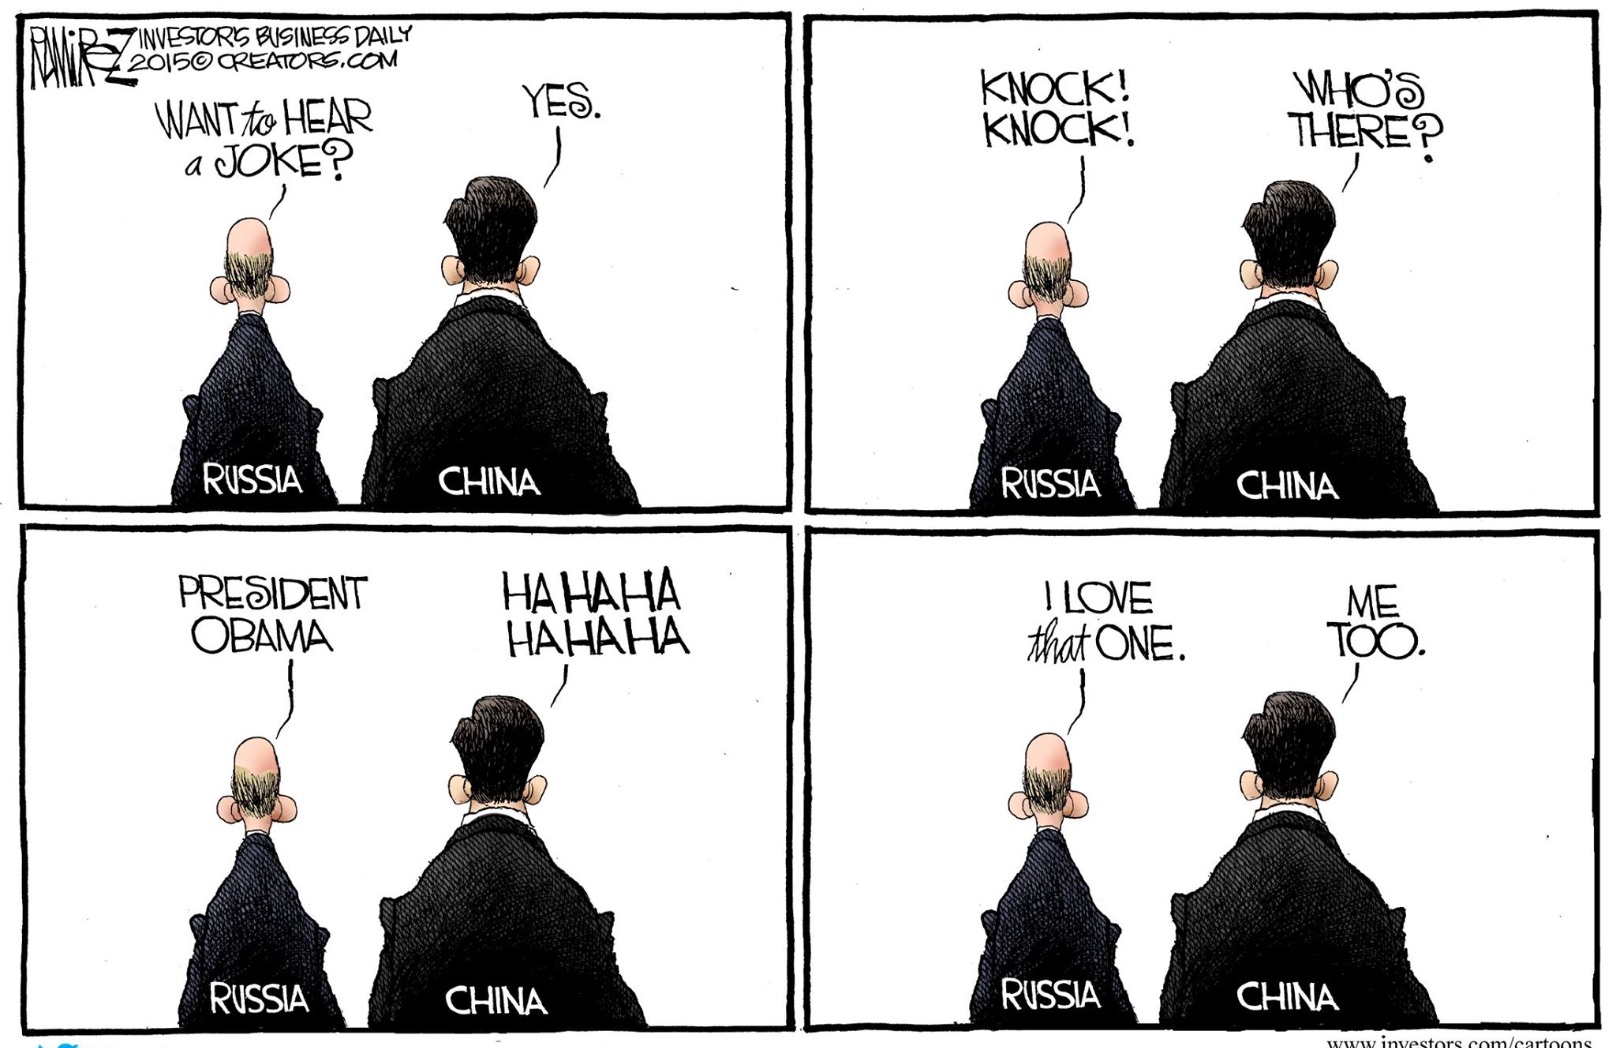 Heard перевести. Обама хахаха. Knock Knock cartoon. Joke you. Joke in China.